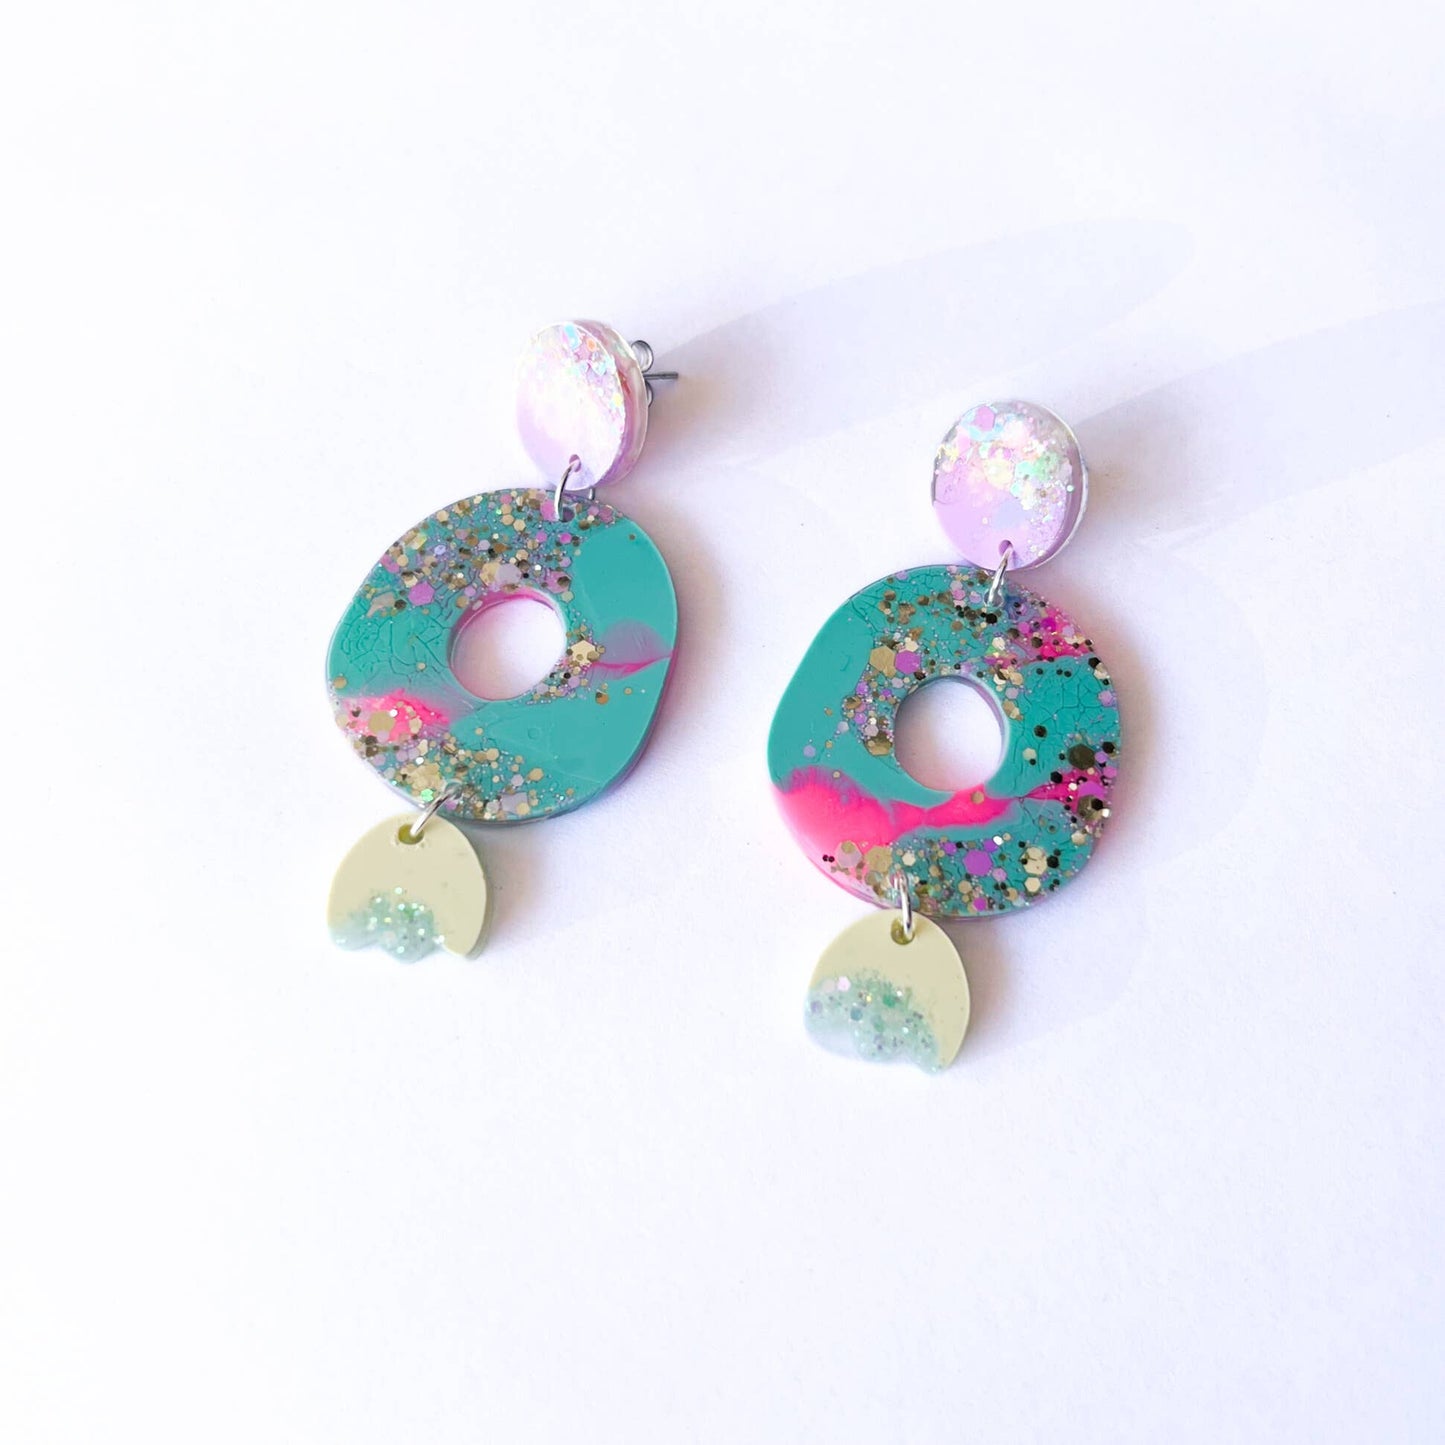 Isla & Marigold- Teal Glitter Resin Organic Donut Dangle  Stud Earrings